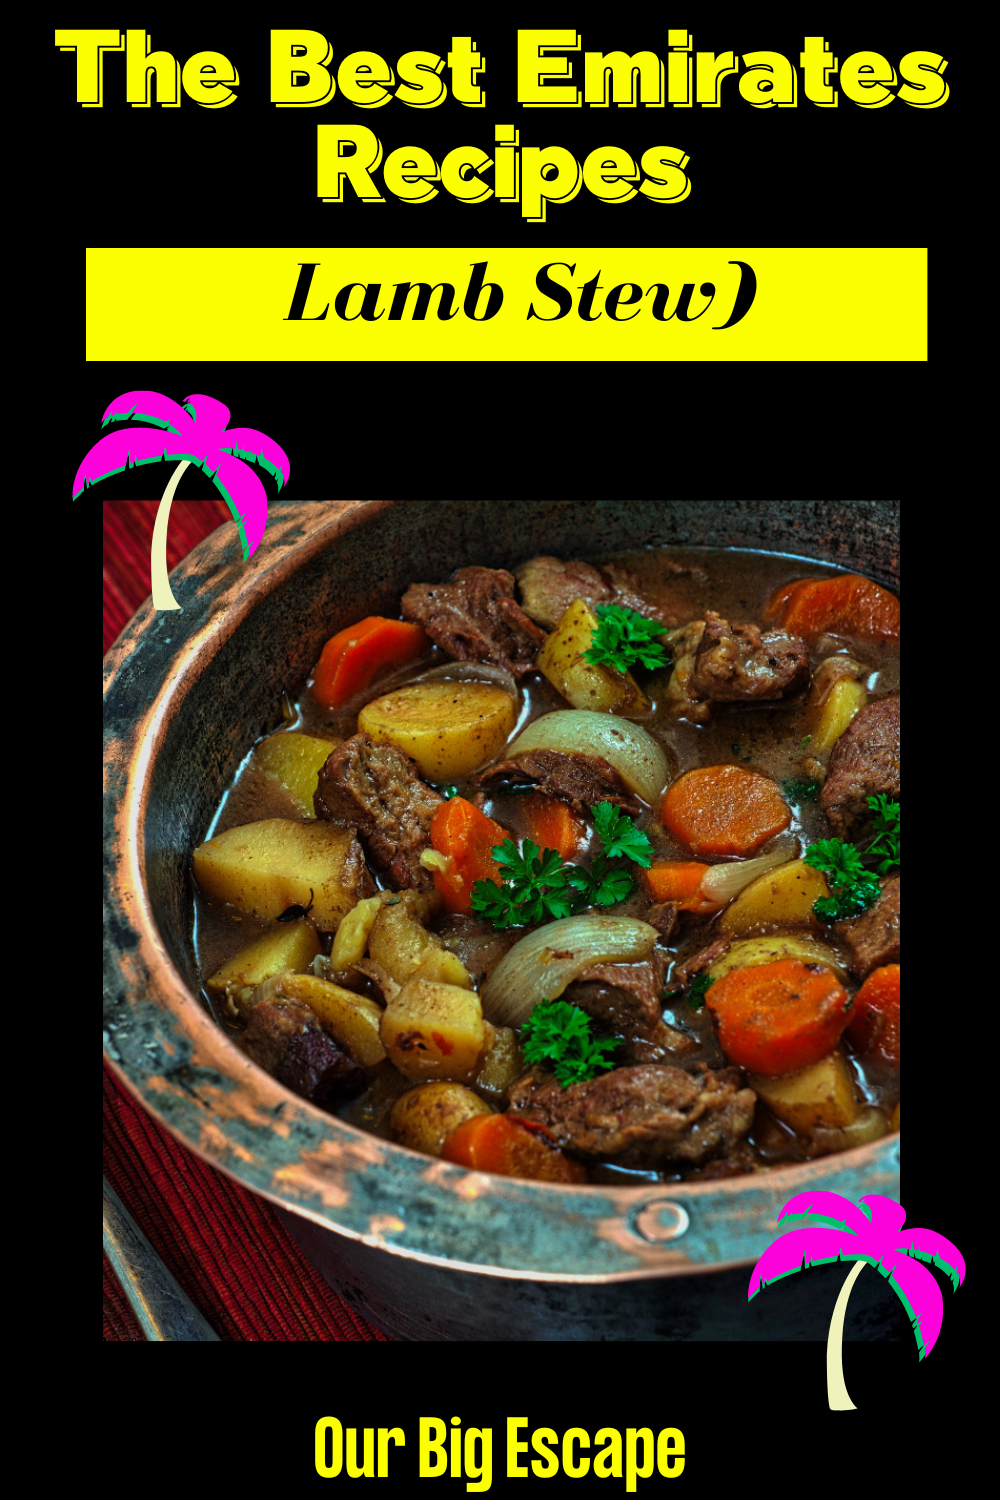 14. Tharid (Emirati Lamb Stew)